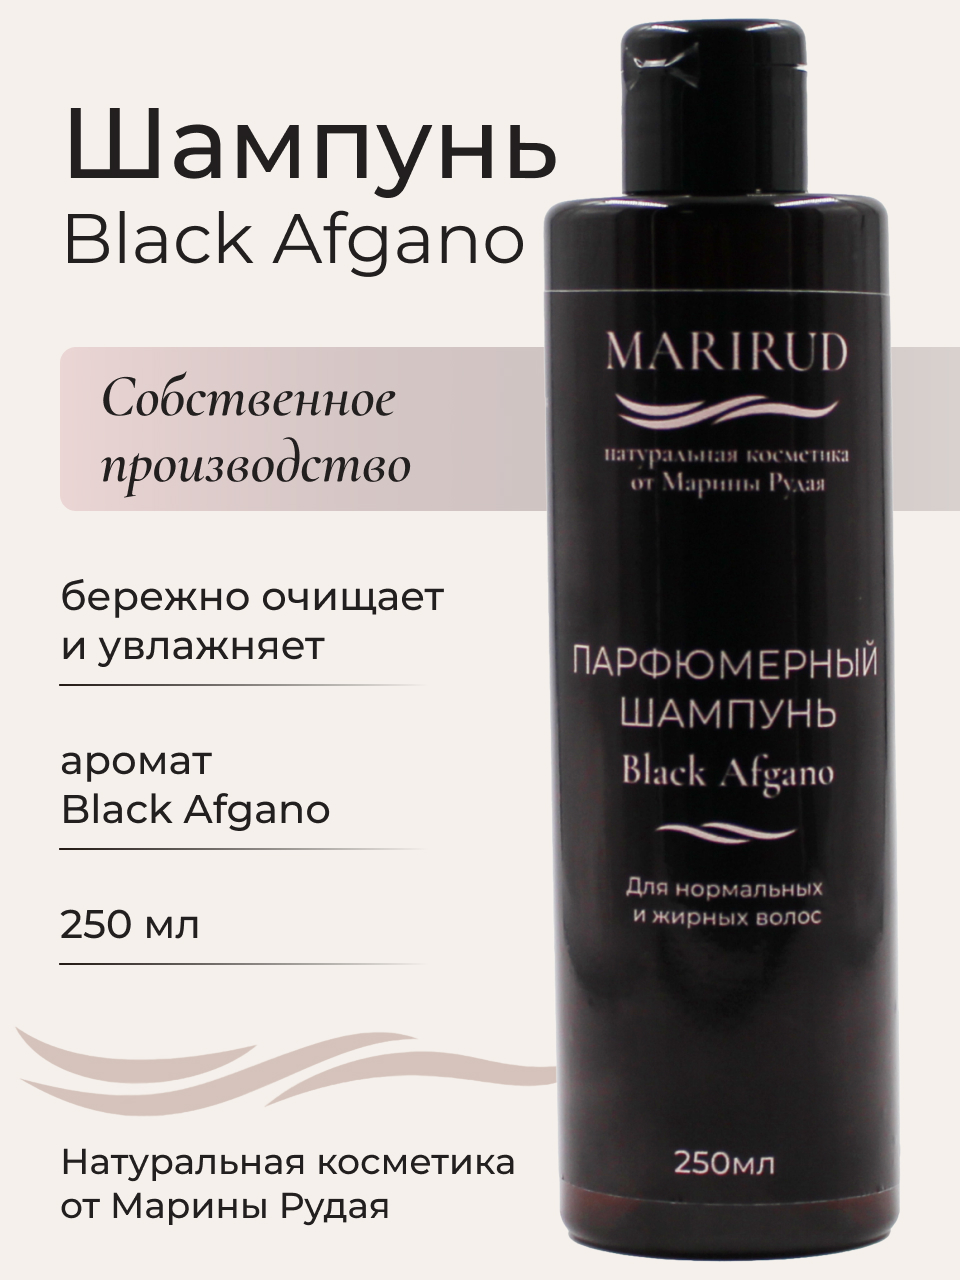 Набор парфюмерный- Шампуни Black Afgano и Tobacco Vanille